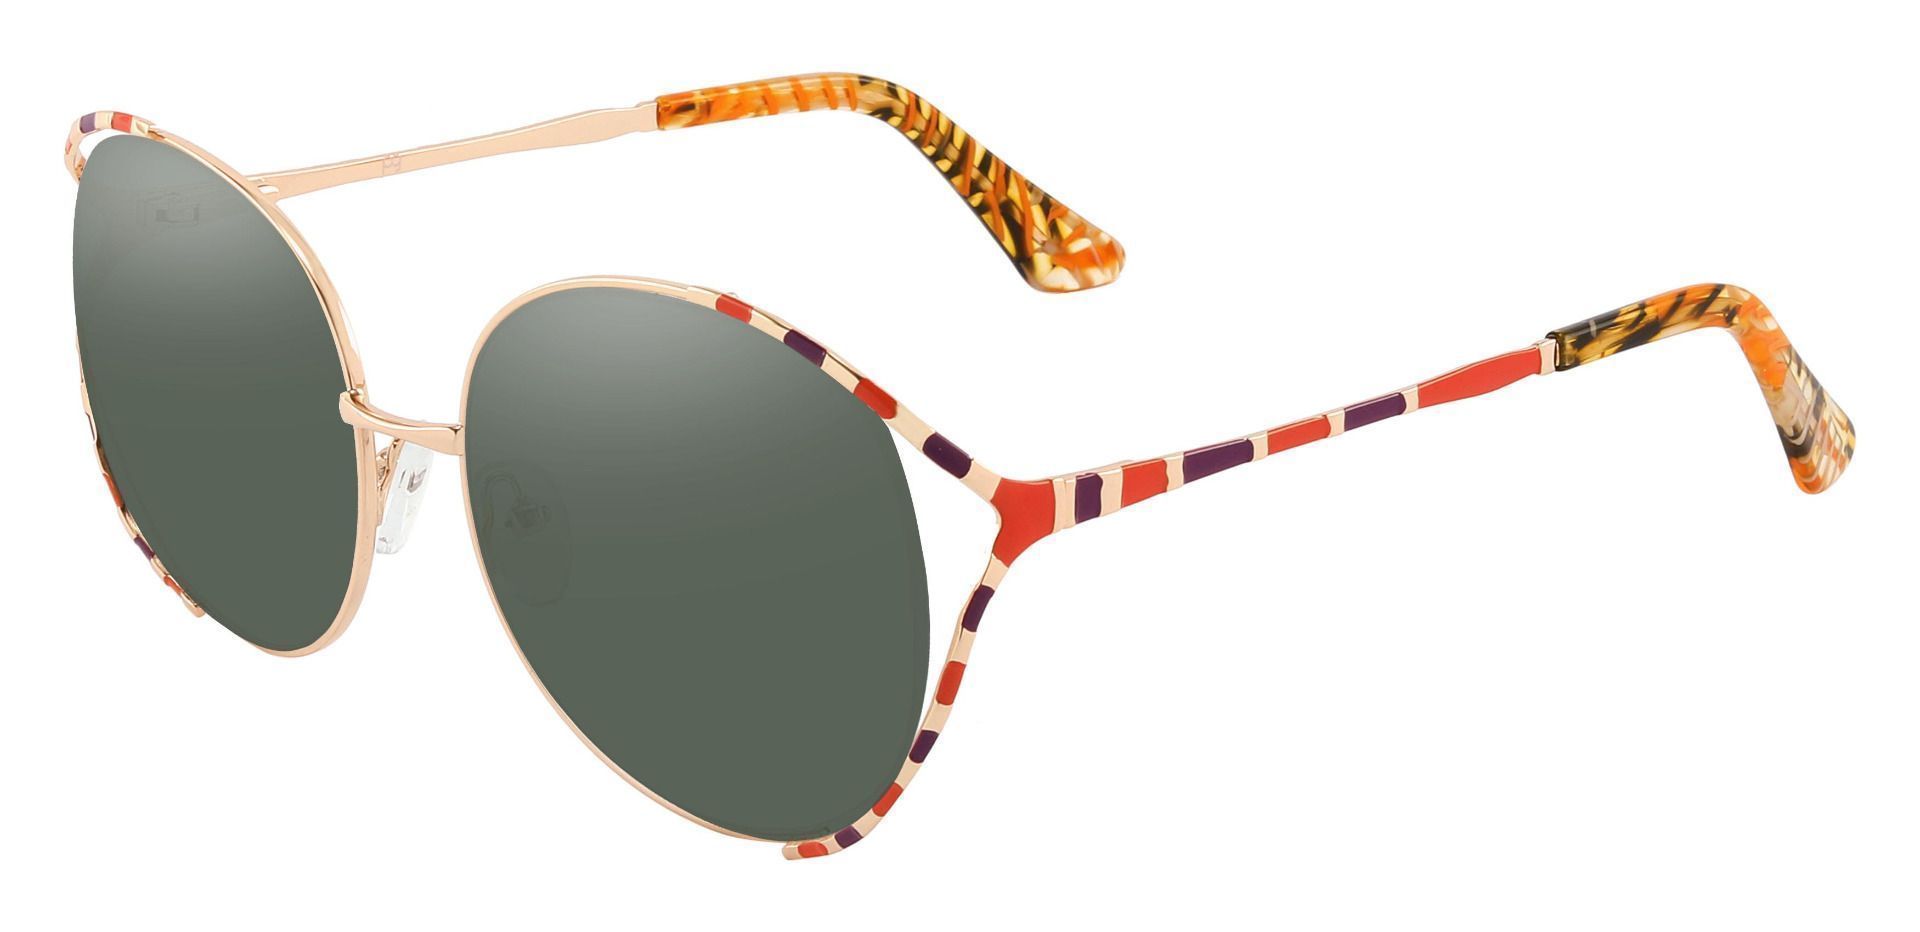 Dorothy Oval Prescription Sunglasses - Brown Frame With Green Lenses